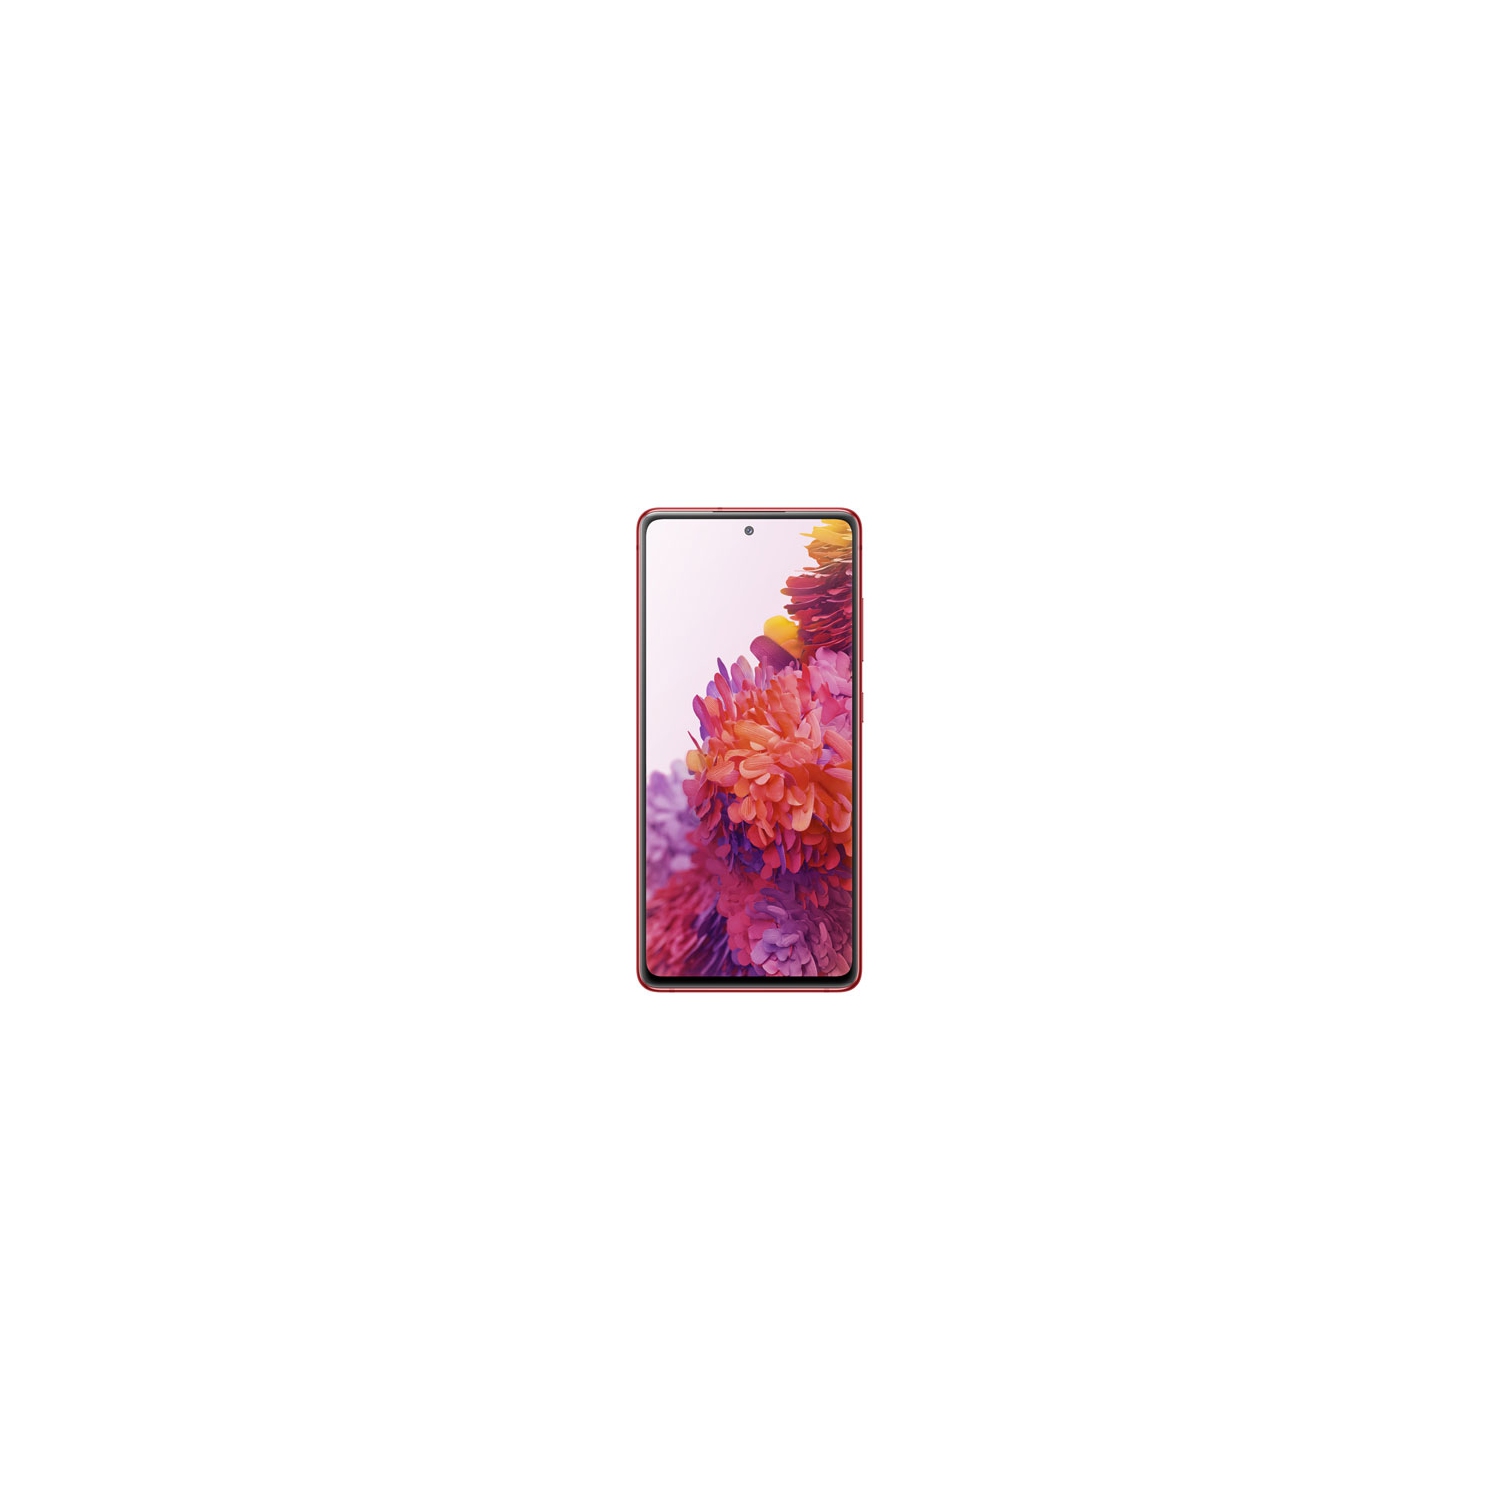 Refurbished (Good) - Samsung Galaxy S20 FE 5G 128GB - Cloud Red - Unlocked